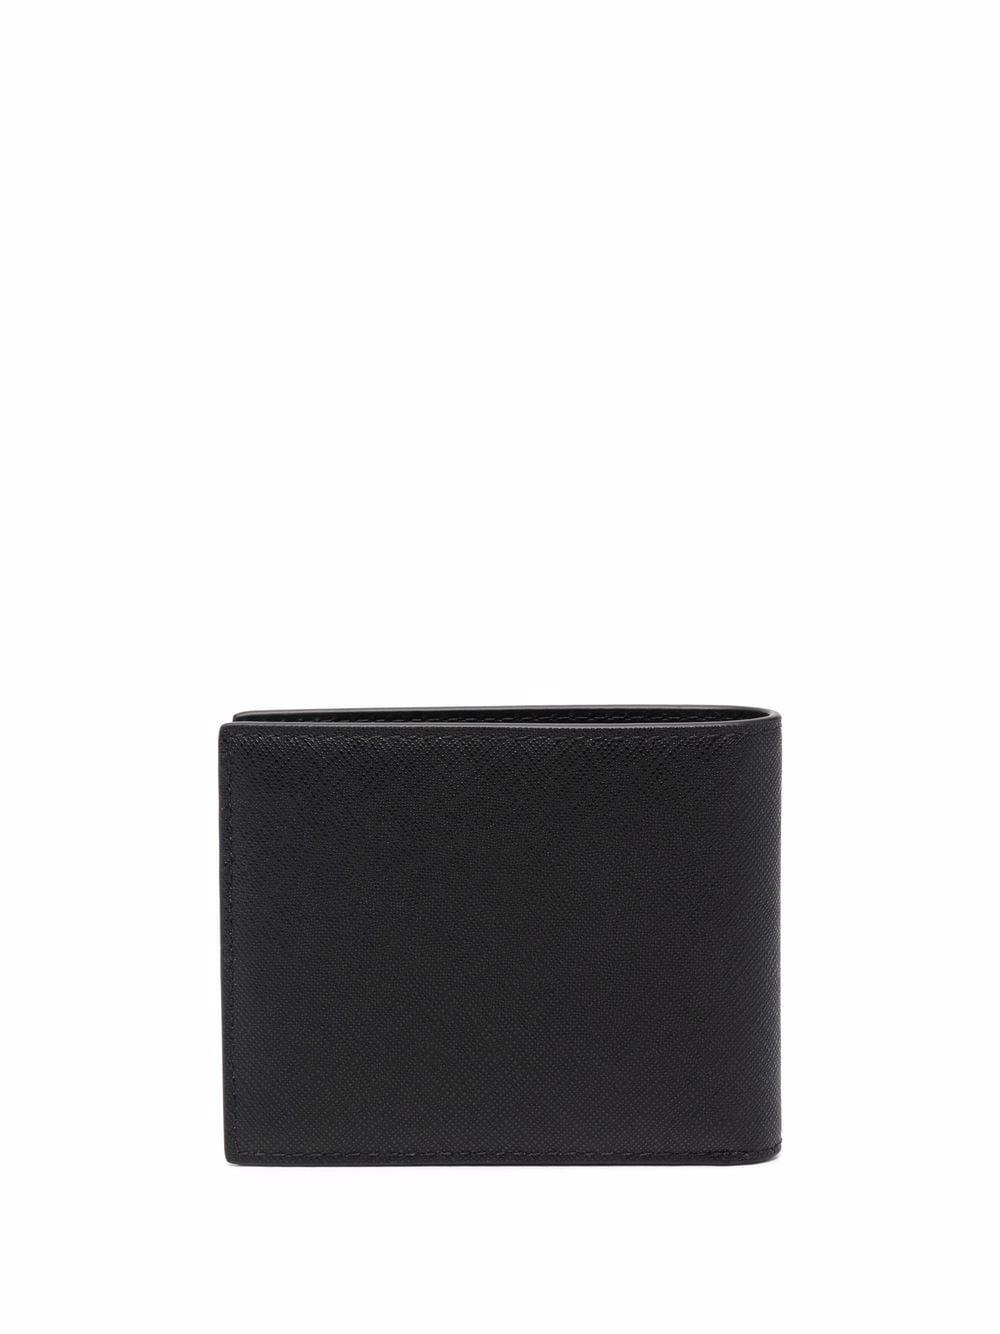 Bally Bevye bifold leather wallet - Black